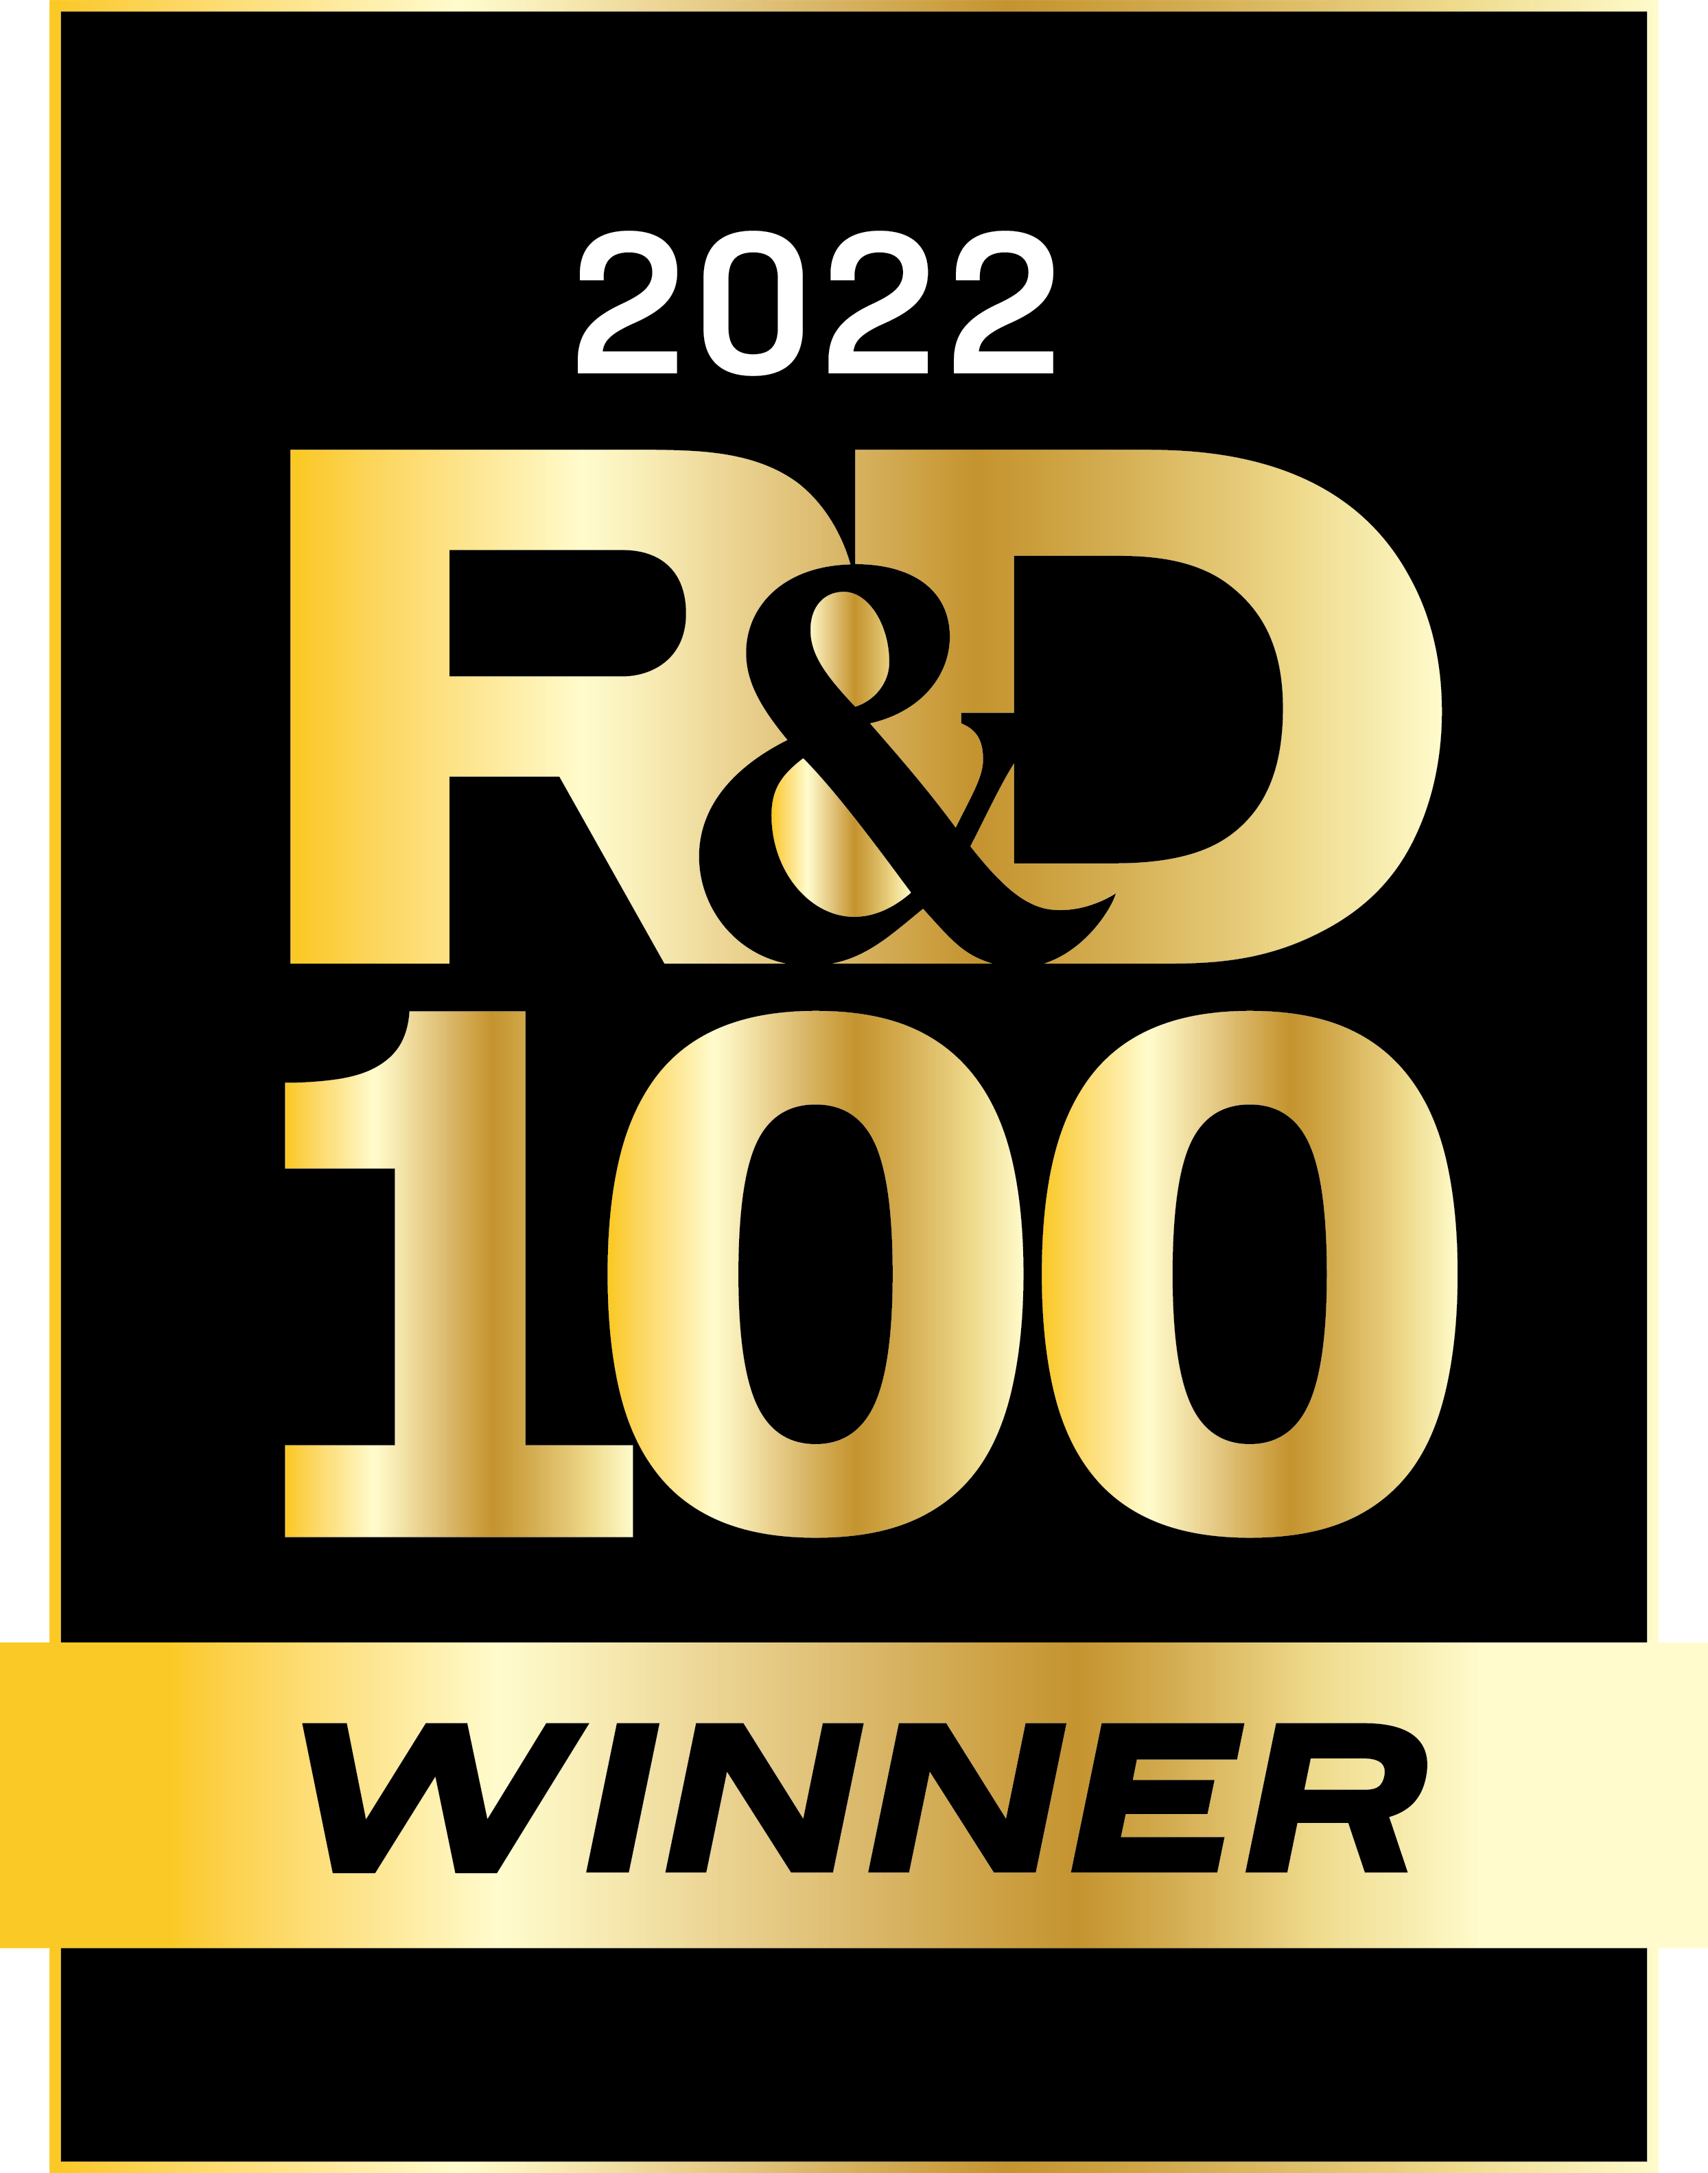 CMI technology EC-Leach won a 2022 R&D 100 Award